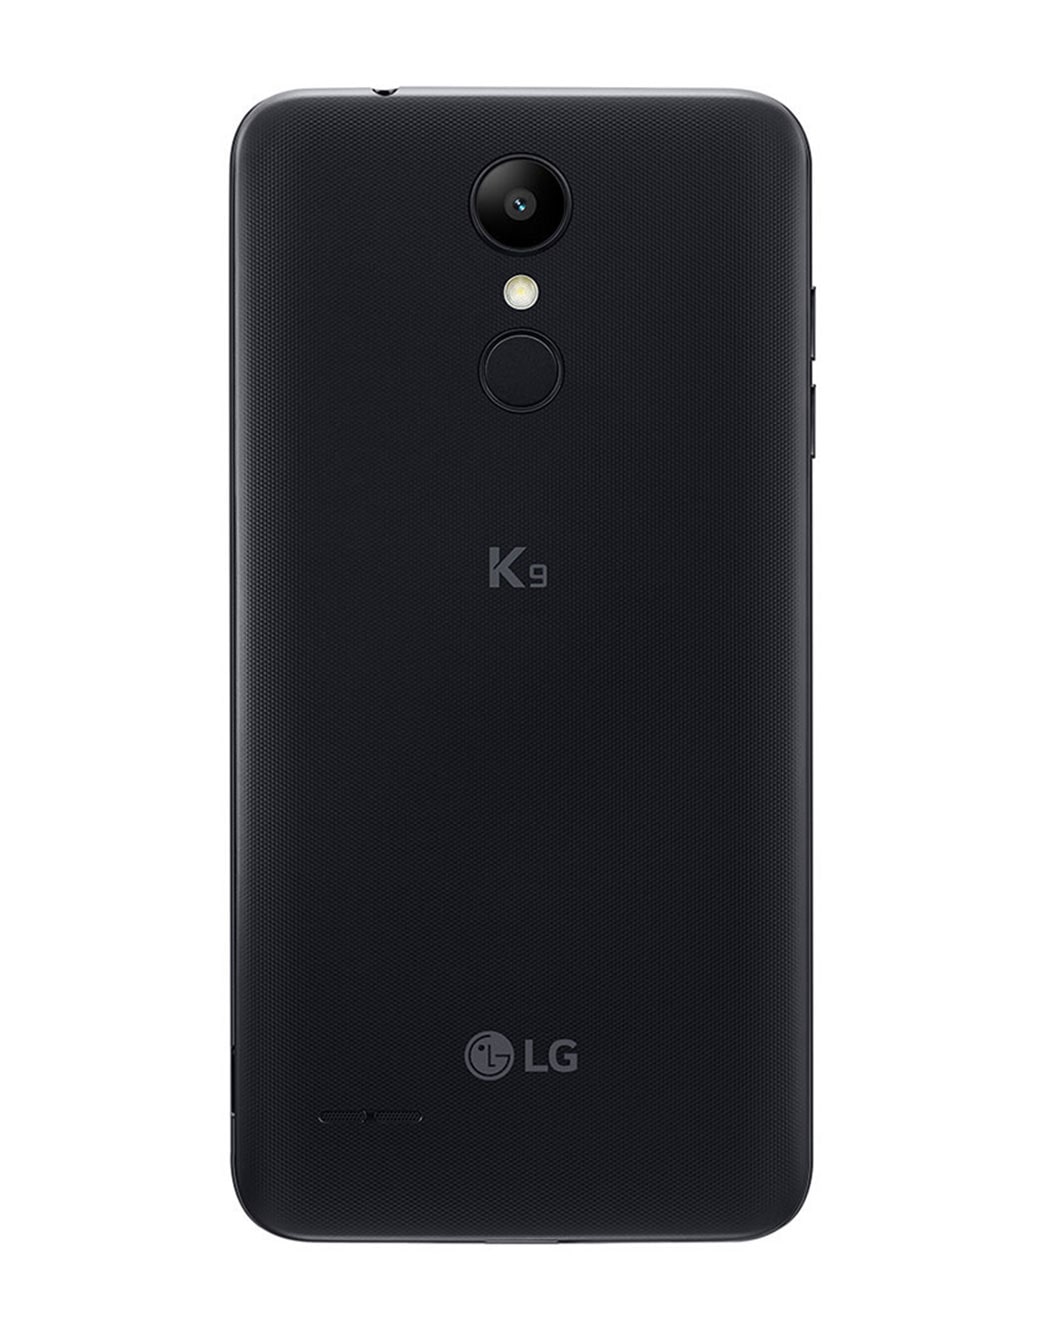 LG K9 | LG Argentina